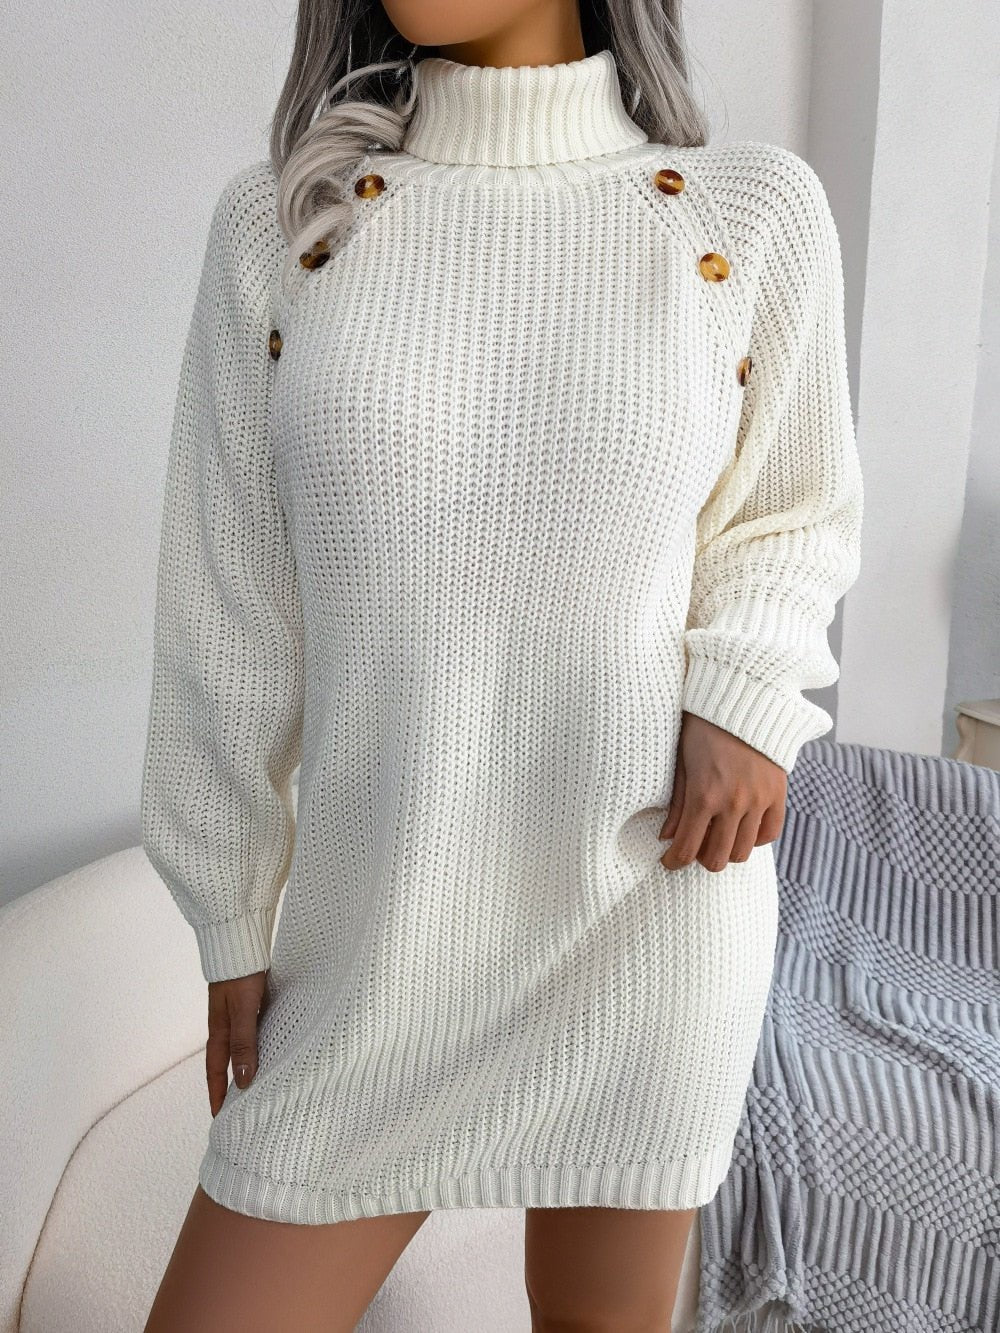 Diana Knitted Sweater-Dress | Comfortabele lang gebreide jurk met knopen voor dames